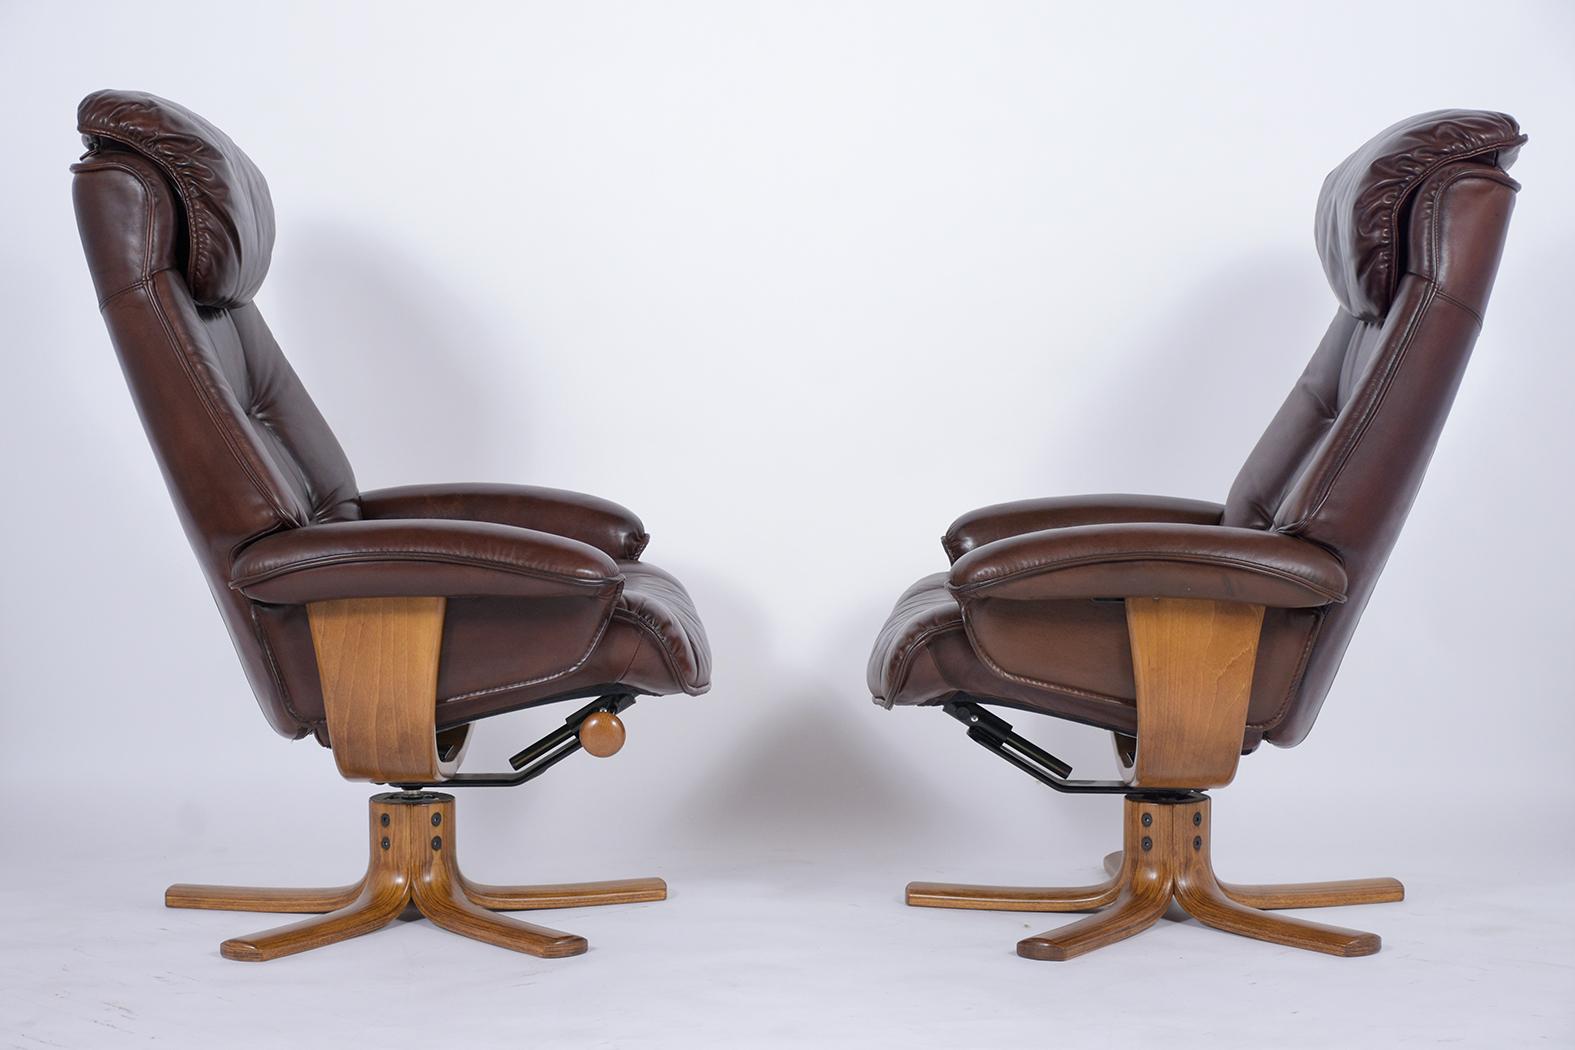 1980s Danish Leather Lounge Chair & Ottoman Set - Vintage Elegance For Sale 3